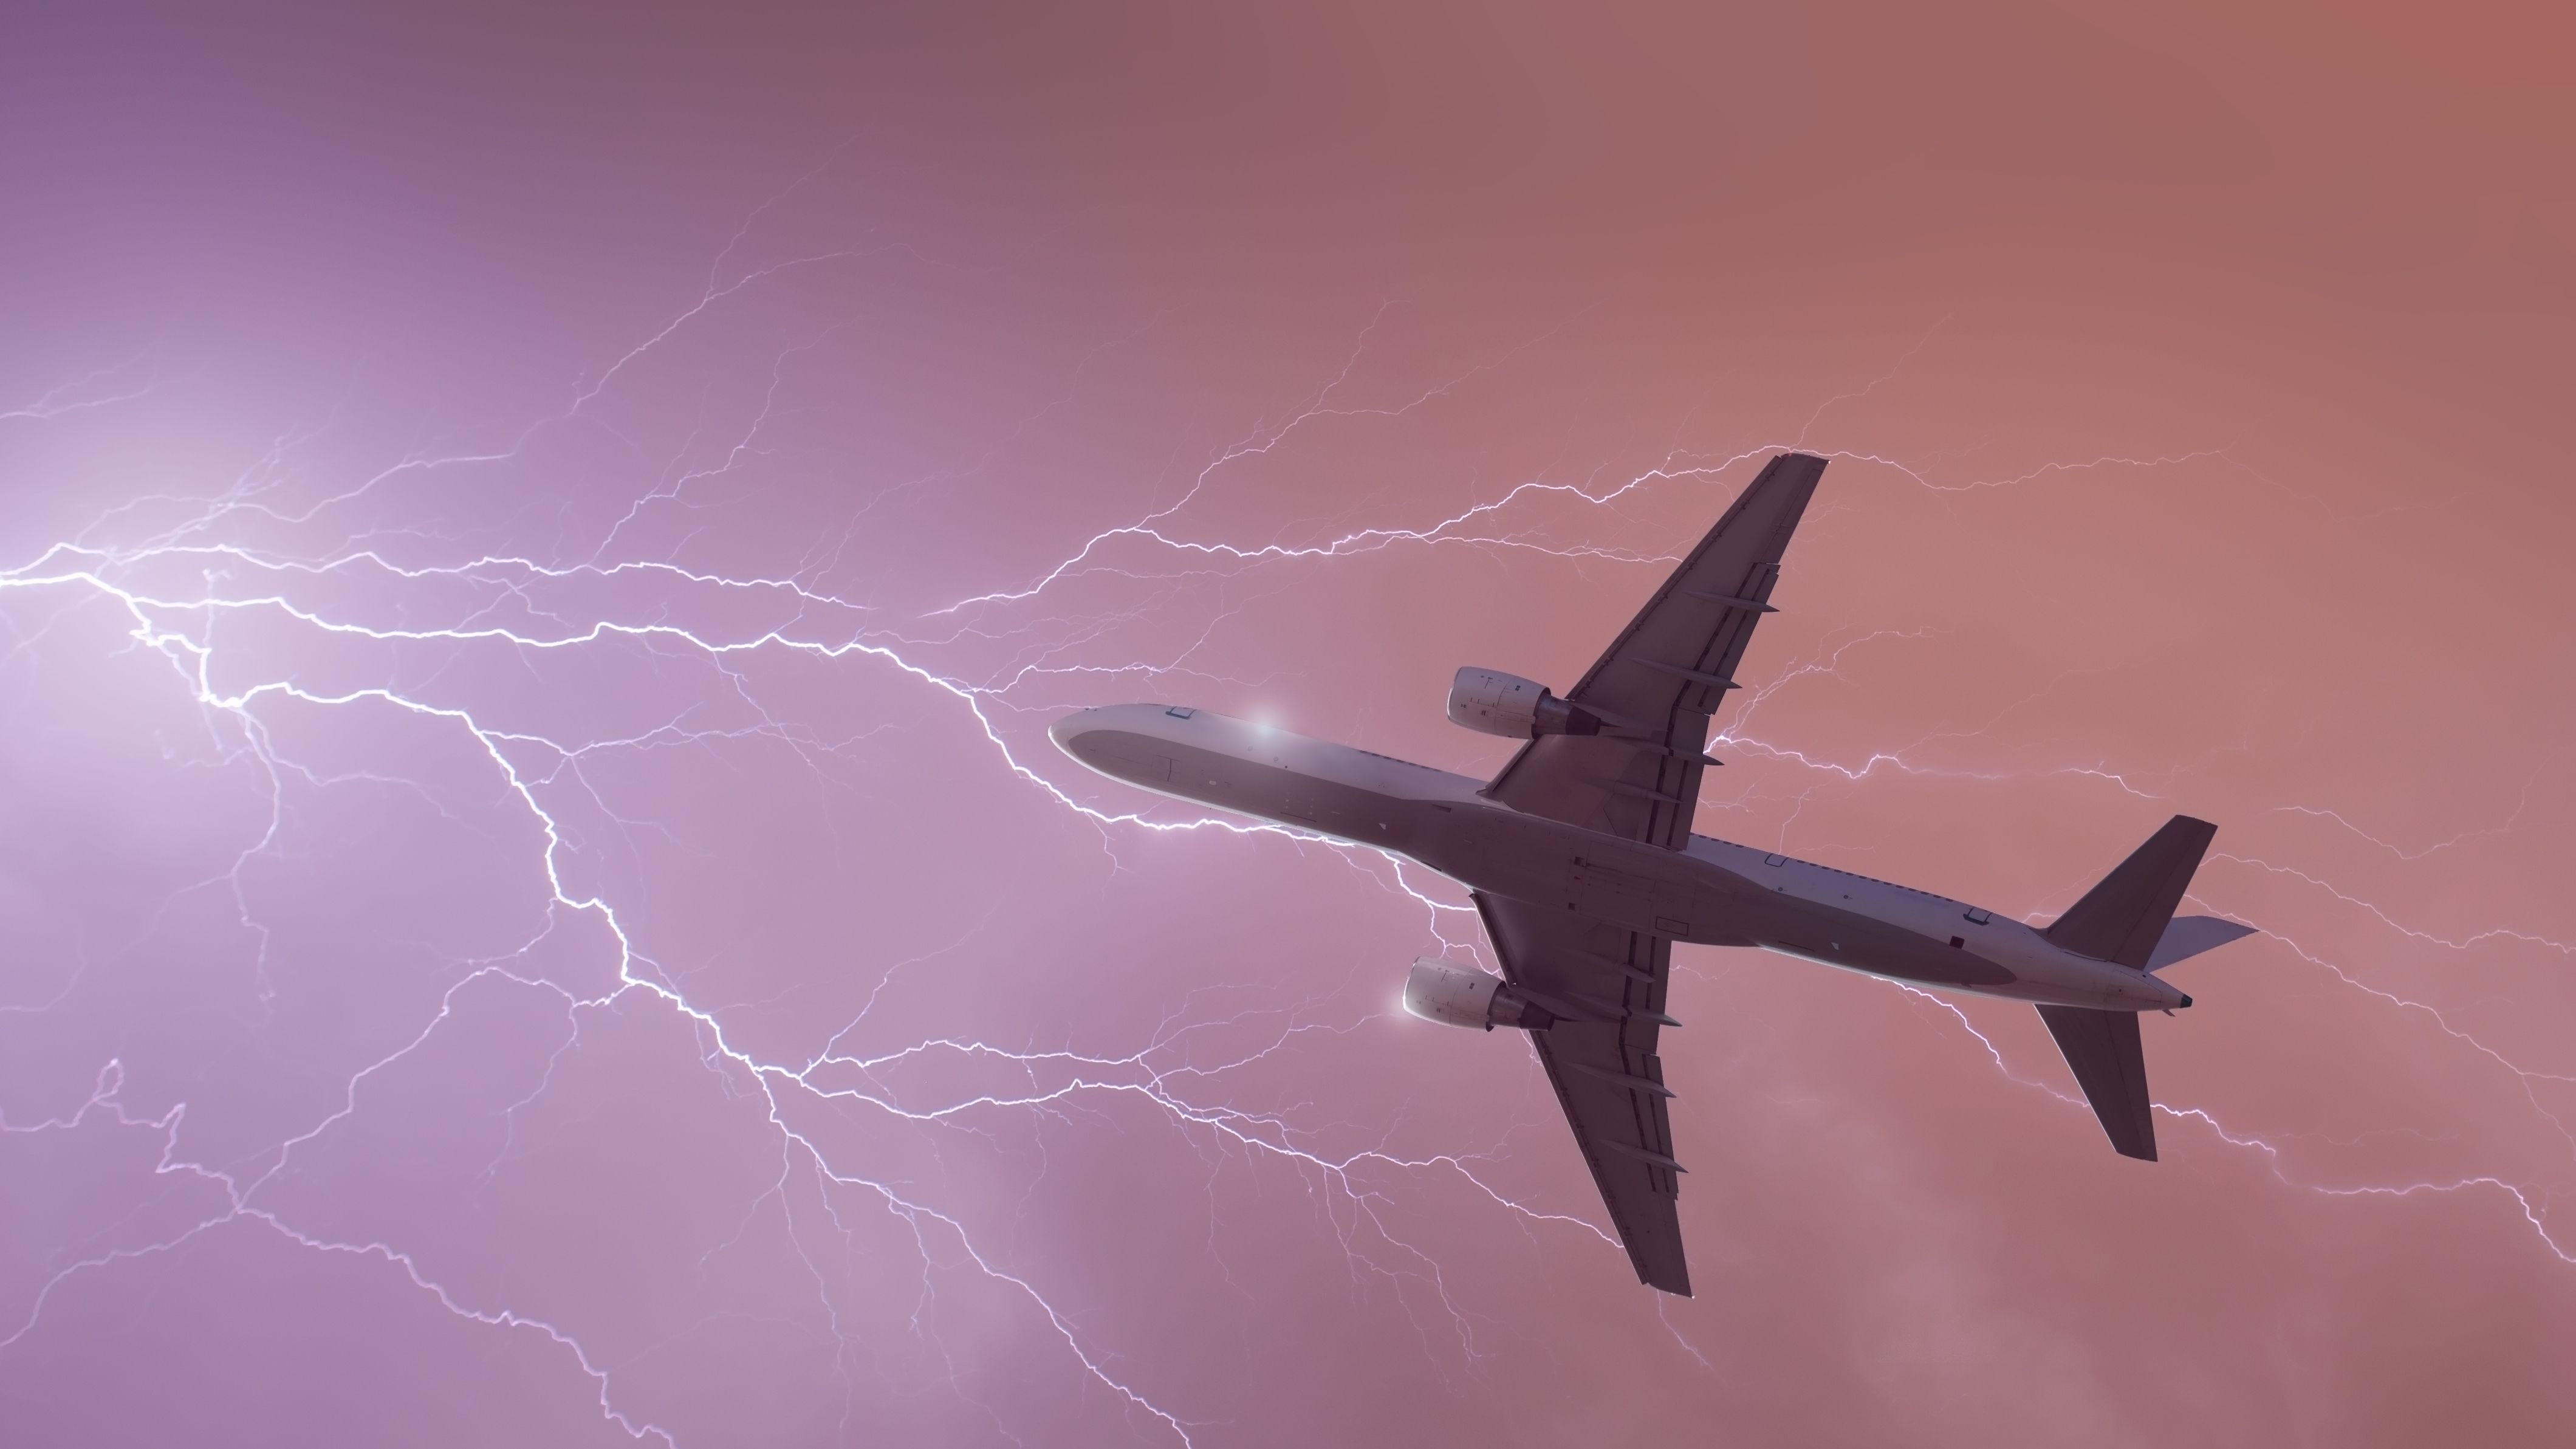 Aircraft lightning strike